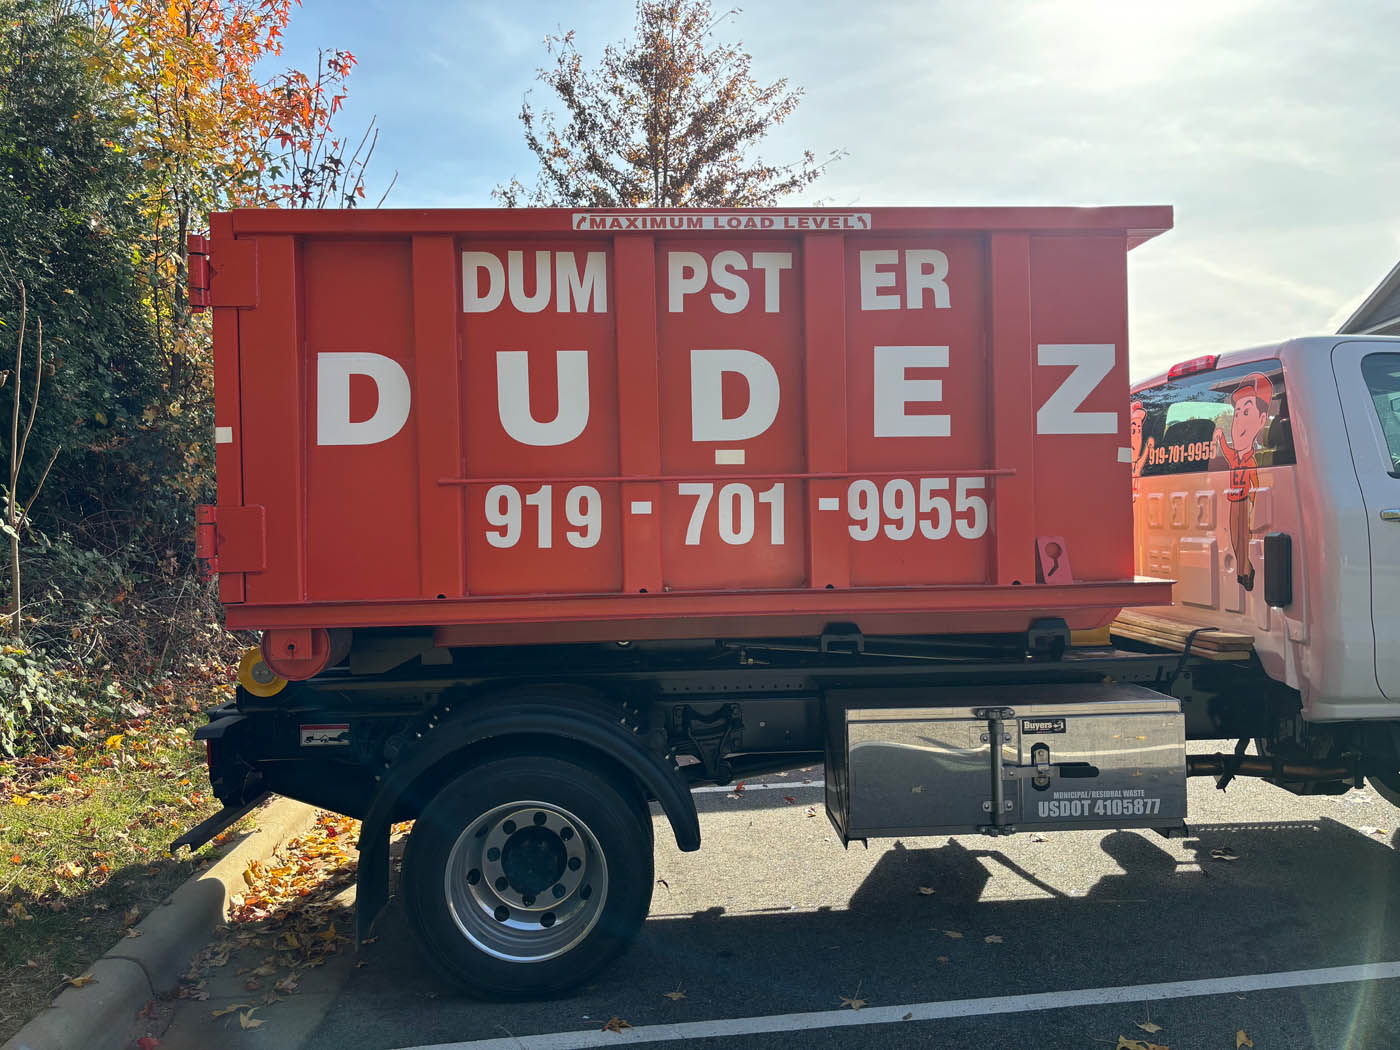 An orange Dumpster Dudez dumpster ready to provide Fayetteville–Springdale–Rogers junk haul away services.